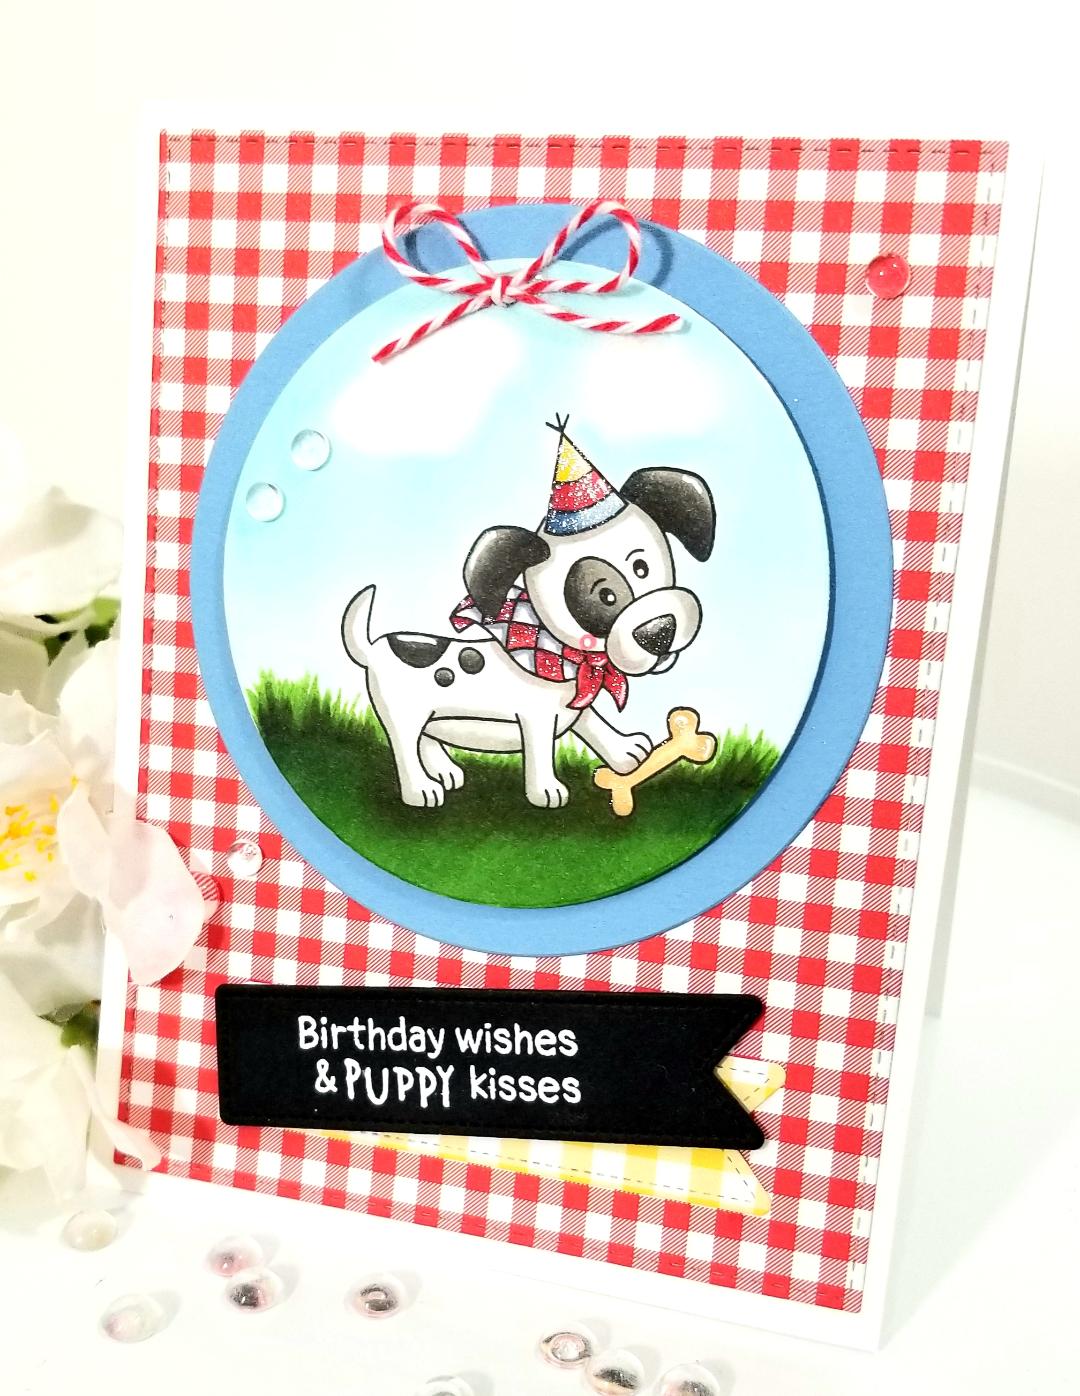 Birthday Wishes & Puppy Kisses Card by February Guest Designer Lori U'ren | Puppy Playtime Stamp Set by Newton's Nook Designs #newtonsnook #handmade